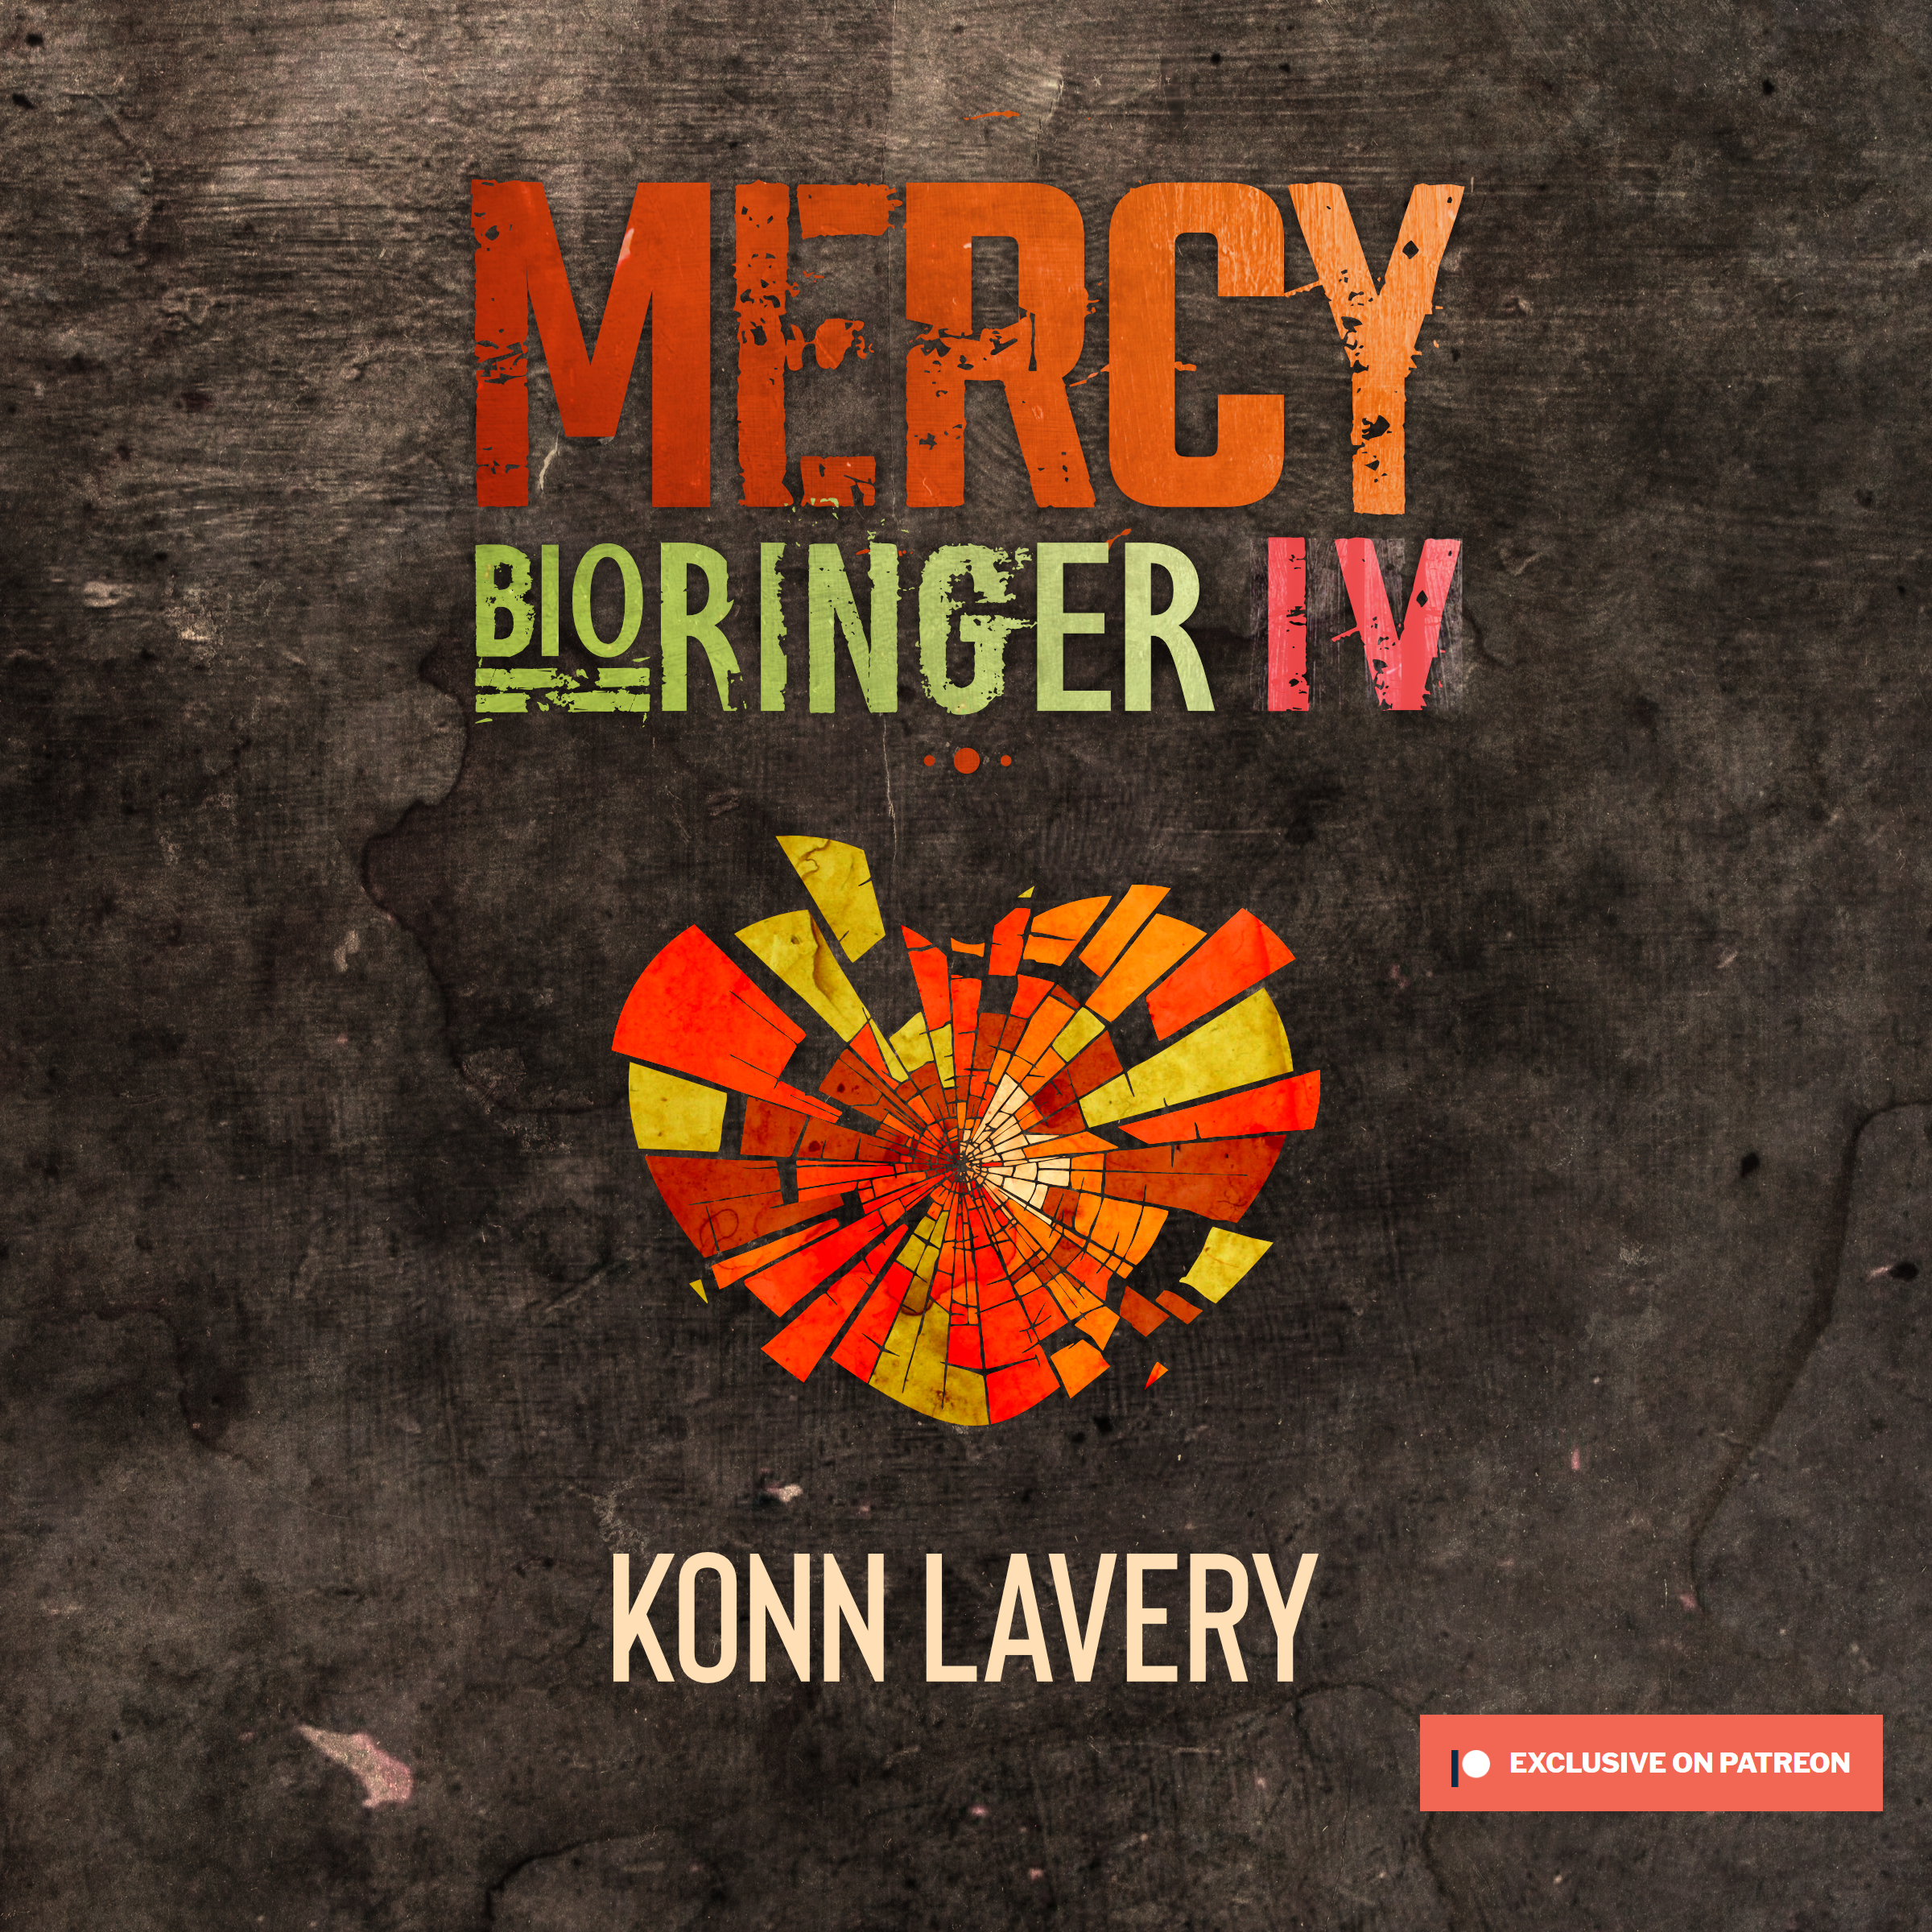 Mercy – Bioringer IV Scifi Short Story by Konn Lavery